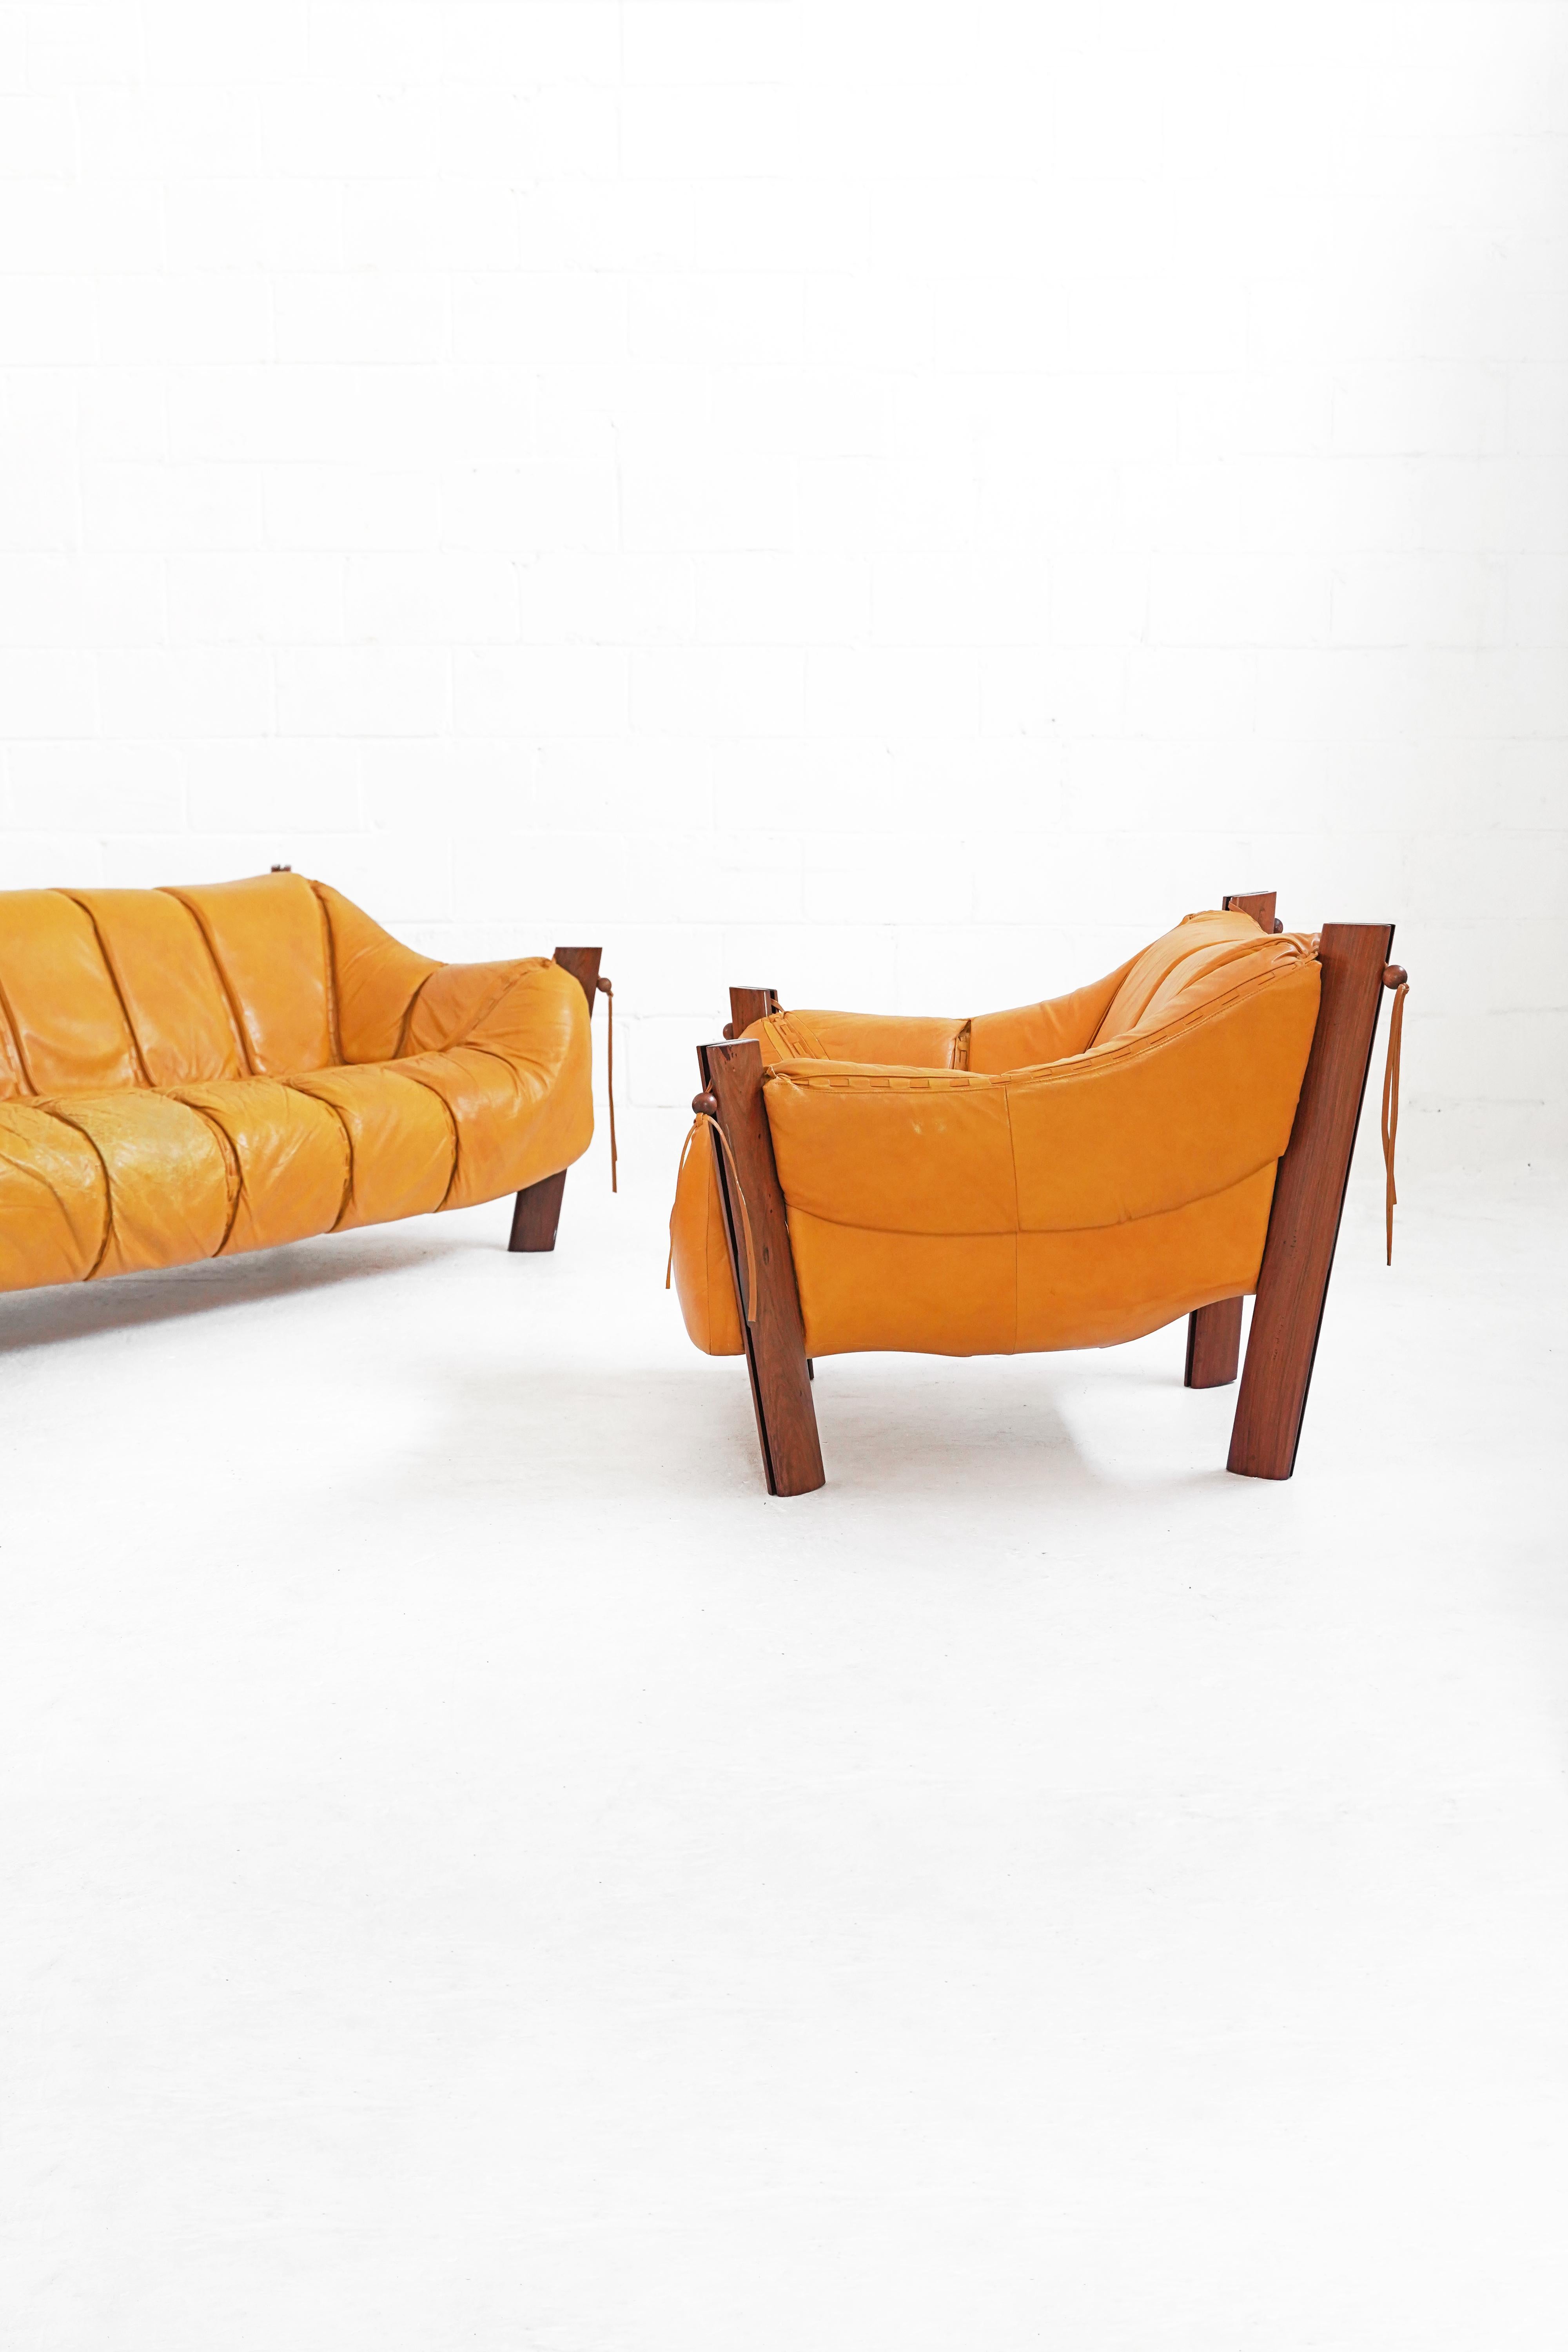 MP-211 Lounge Chair by Brazilian Designer Percival Lafer for Móveis Lafer 8